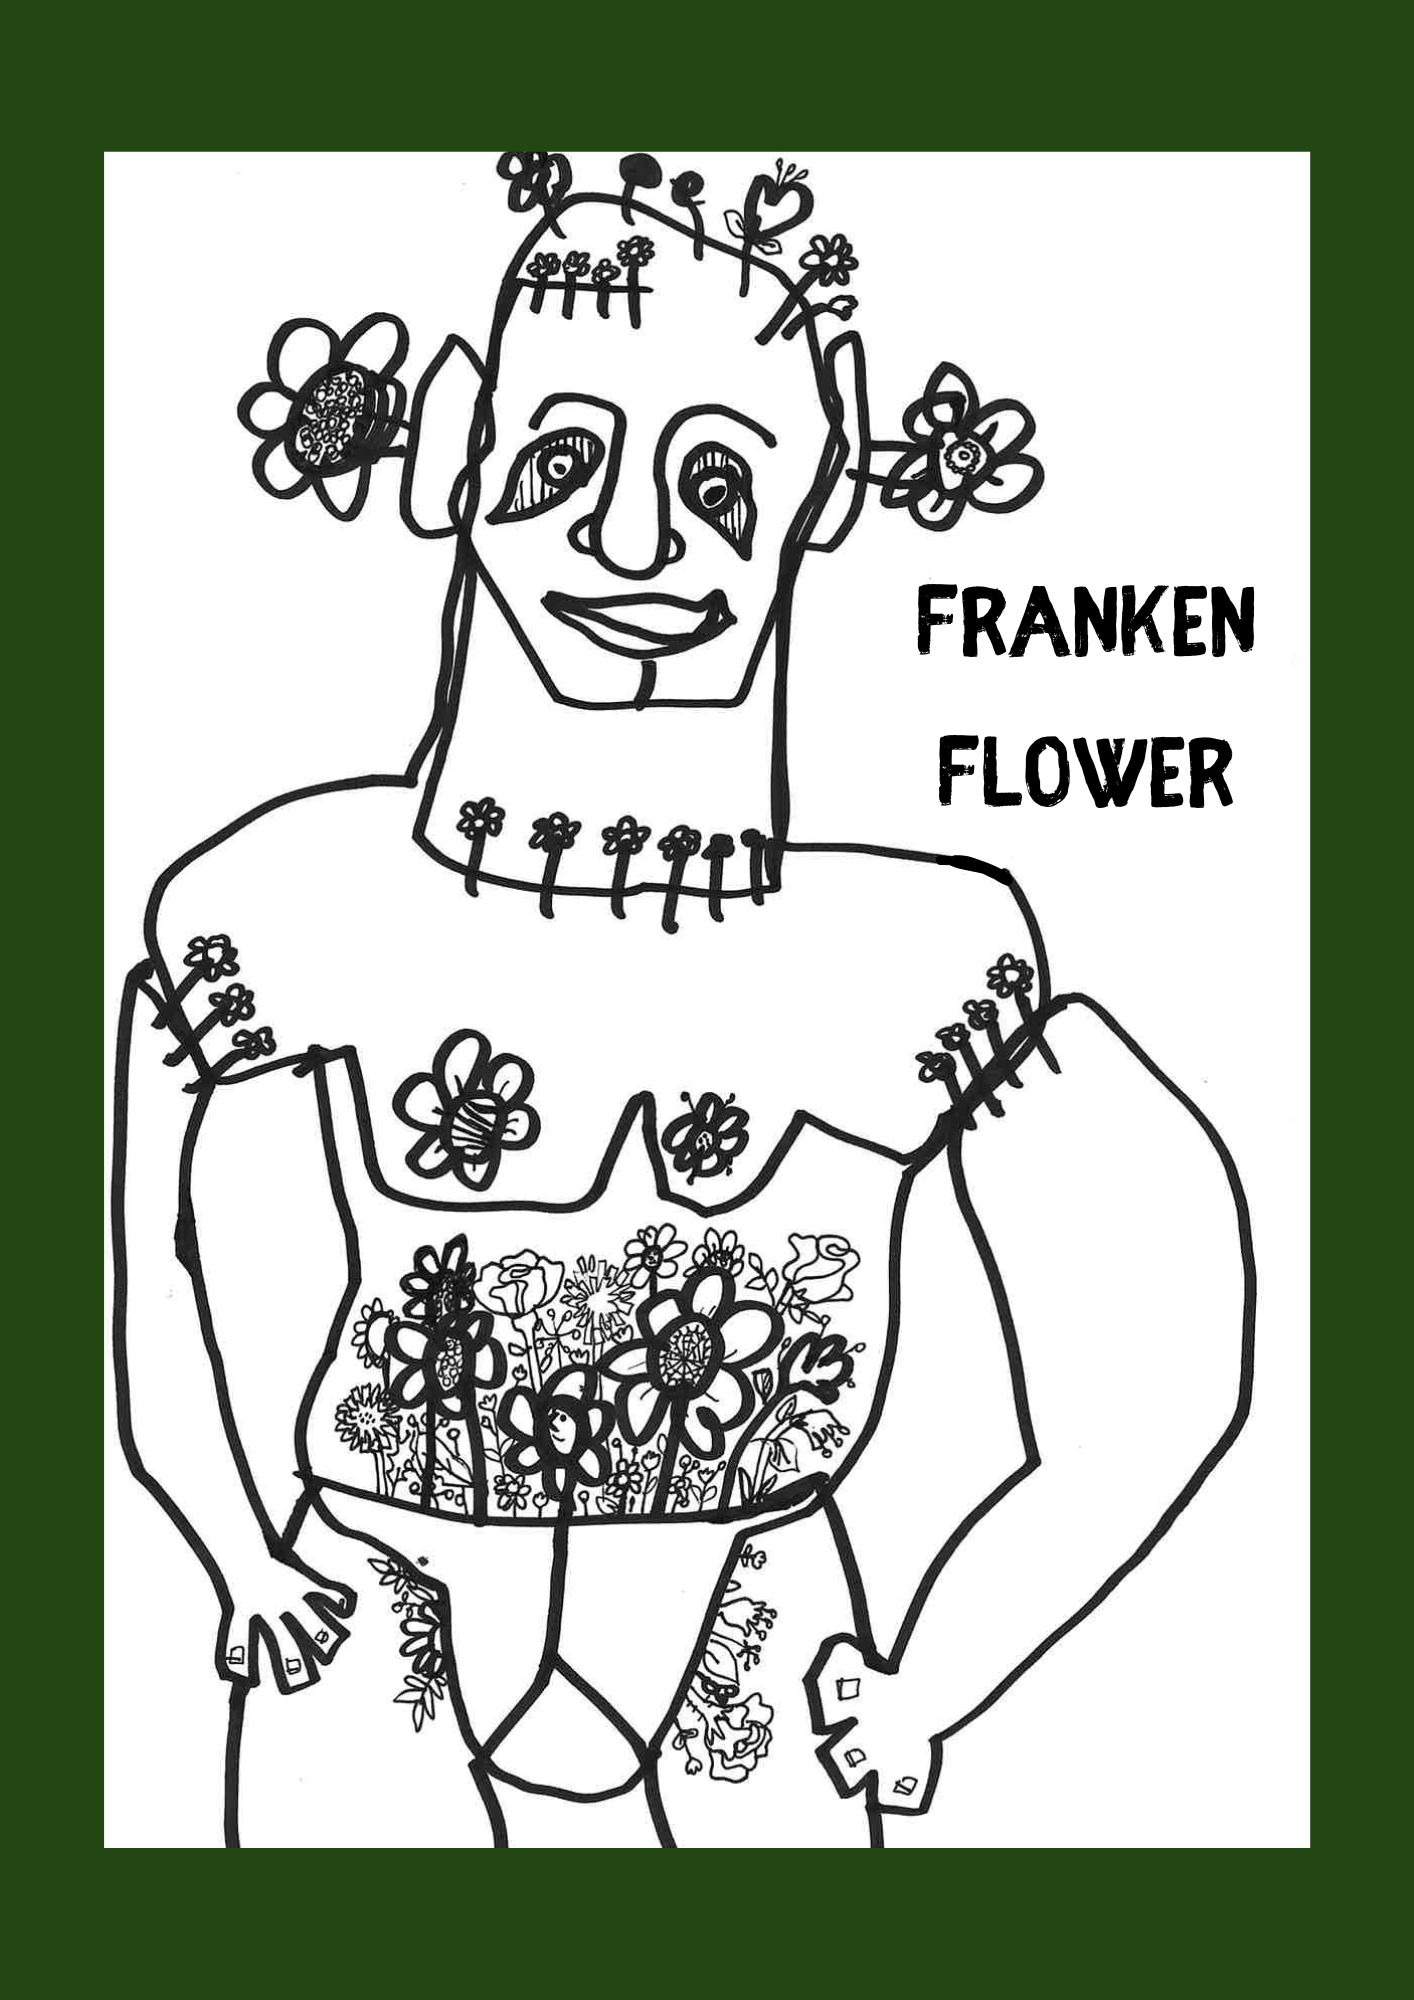 Franken Flower note book cover